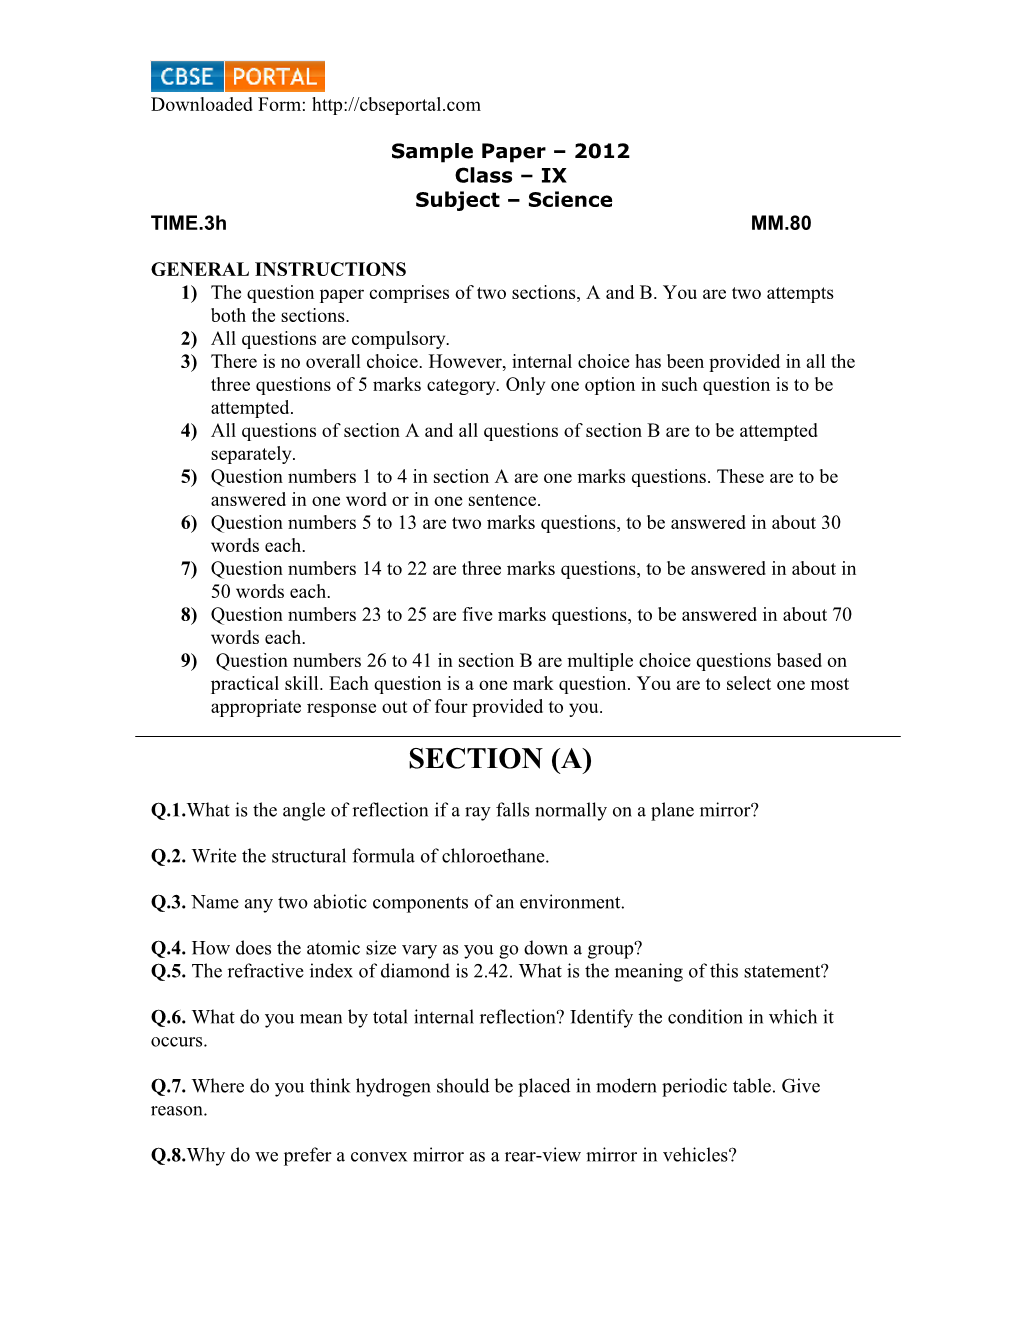 Sample Paper 2012 Class IX Subject Science